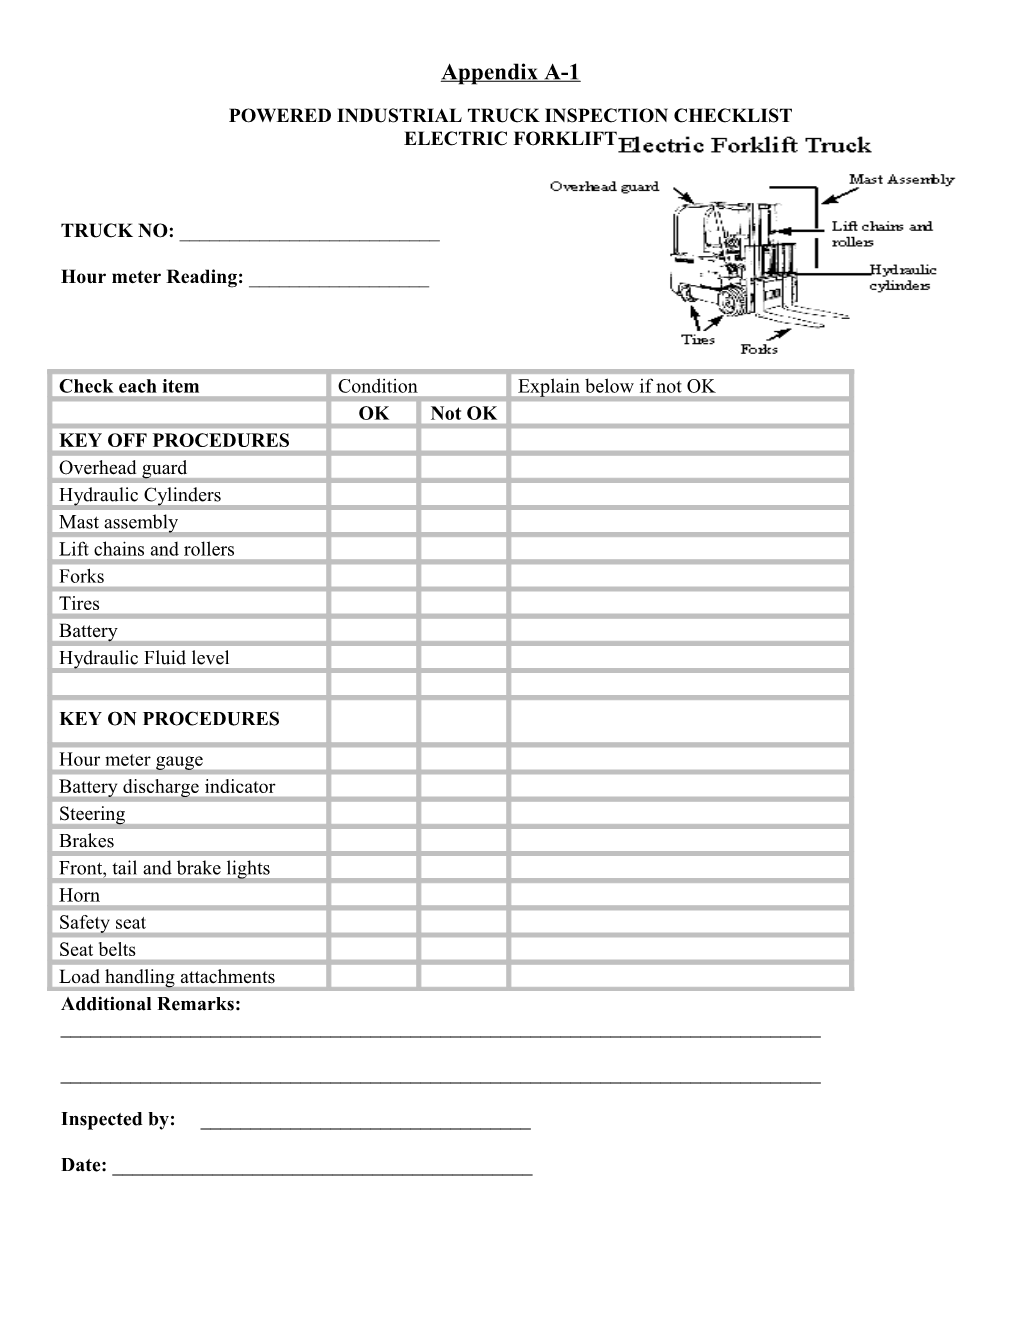 Powered Industrial Truck Inspection Checklist